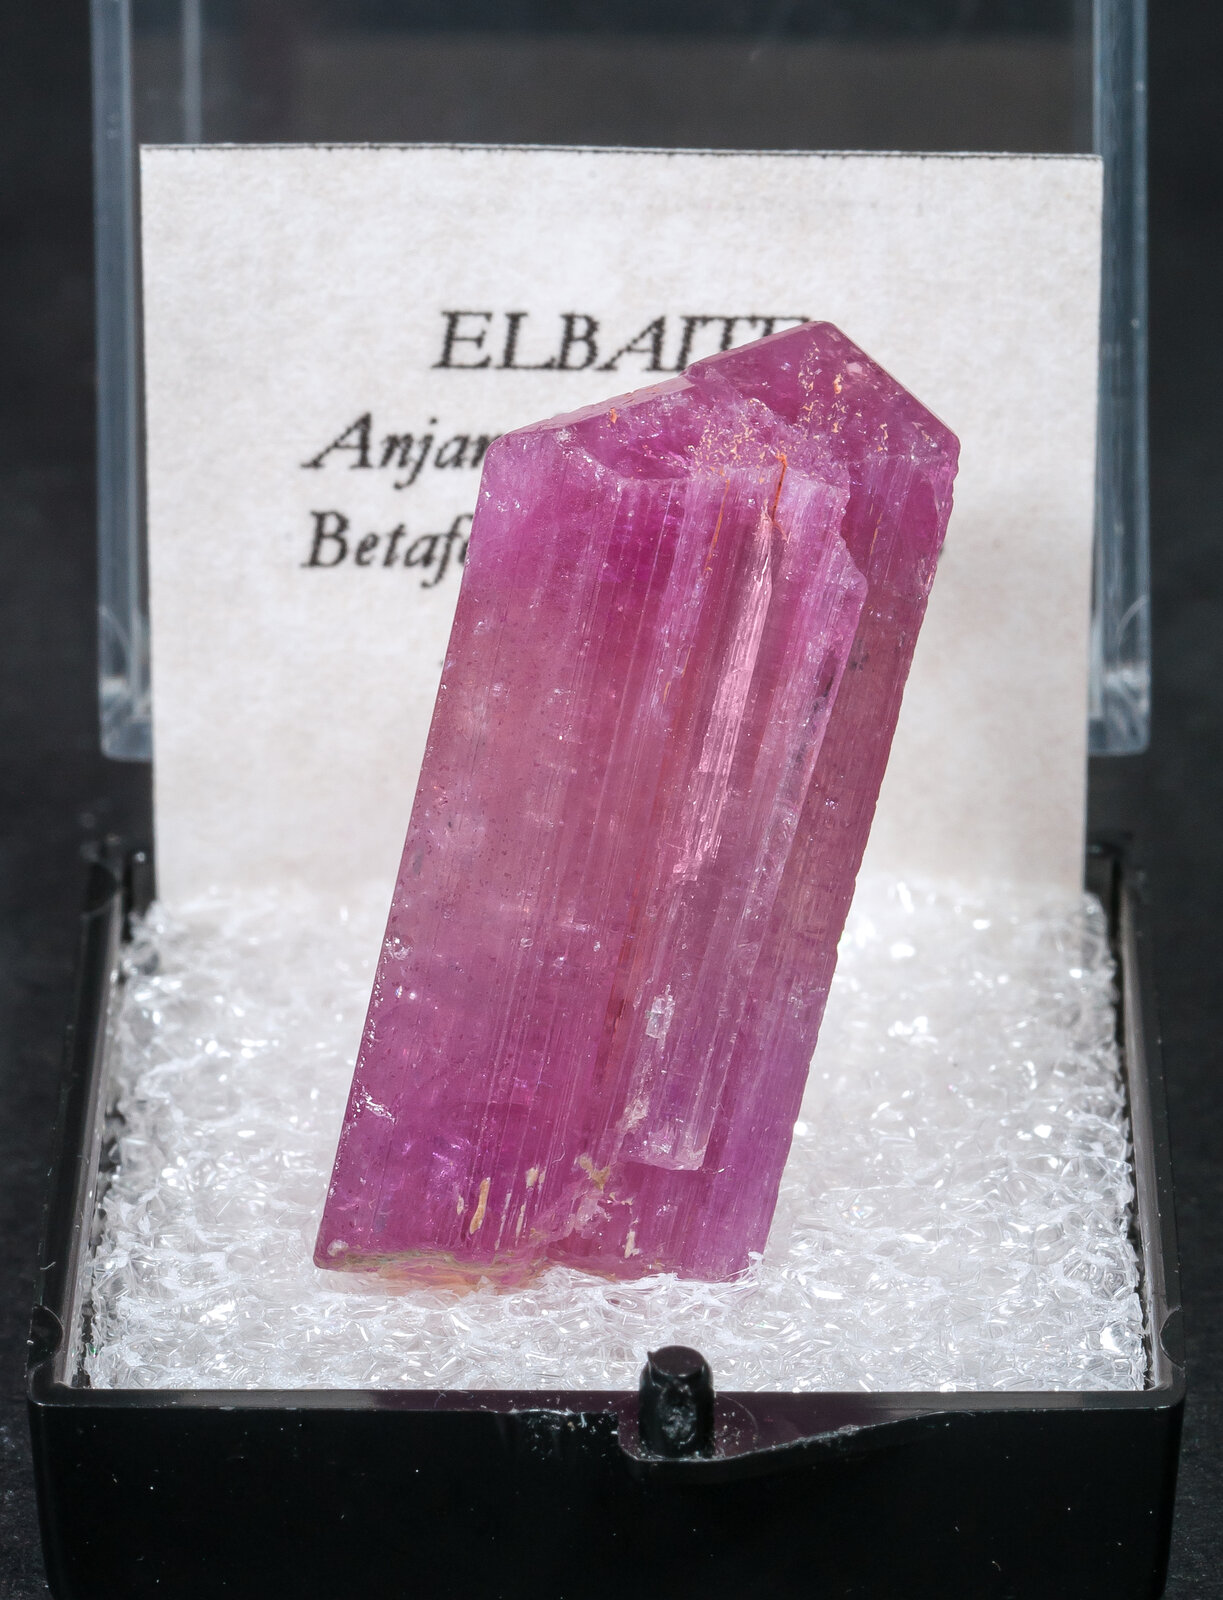 specimens/s_imagesAM9/Elbaite-MF86AM9f.jpg